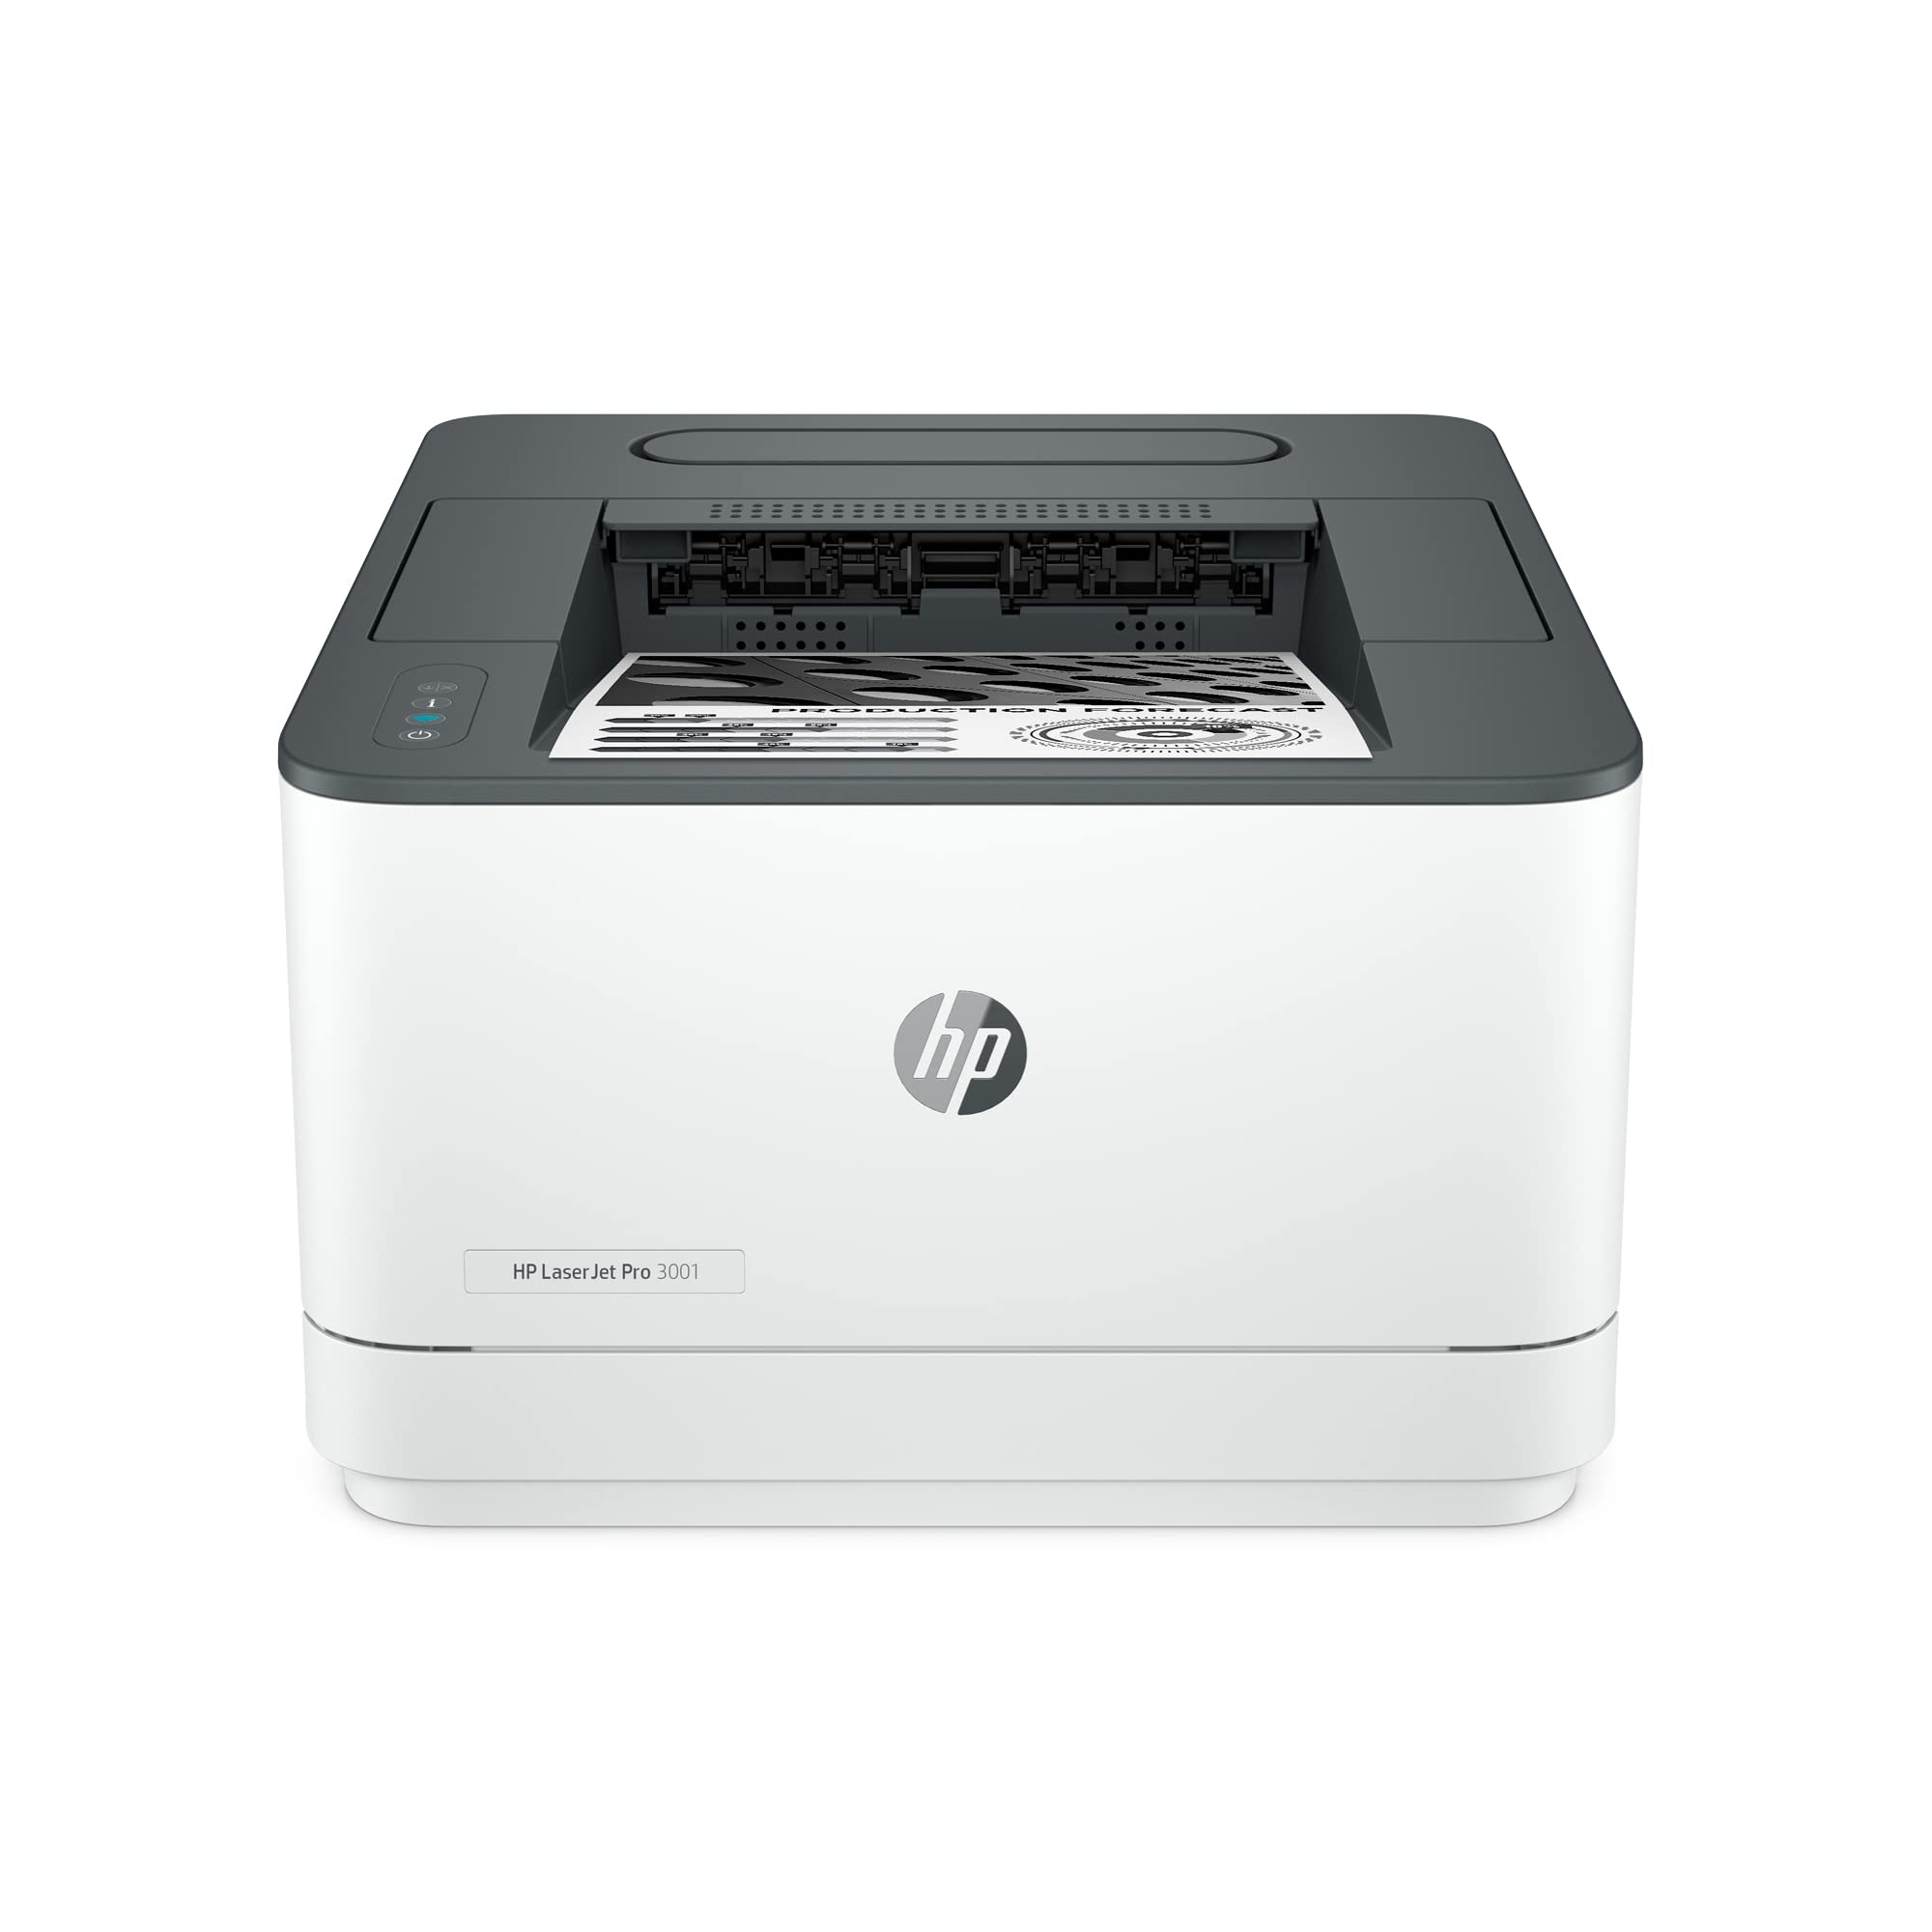 HP Impressora Laserjet Pro 4001ne preto e branco com + recursos de escritório inteligente